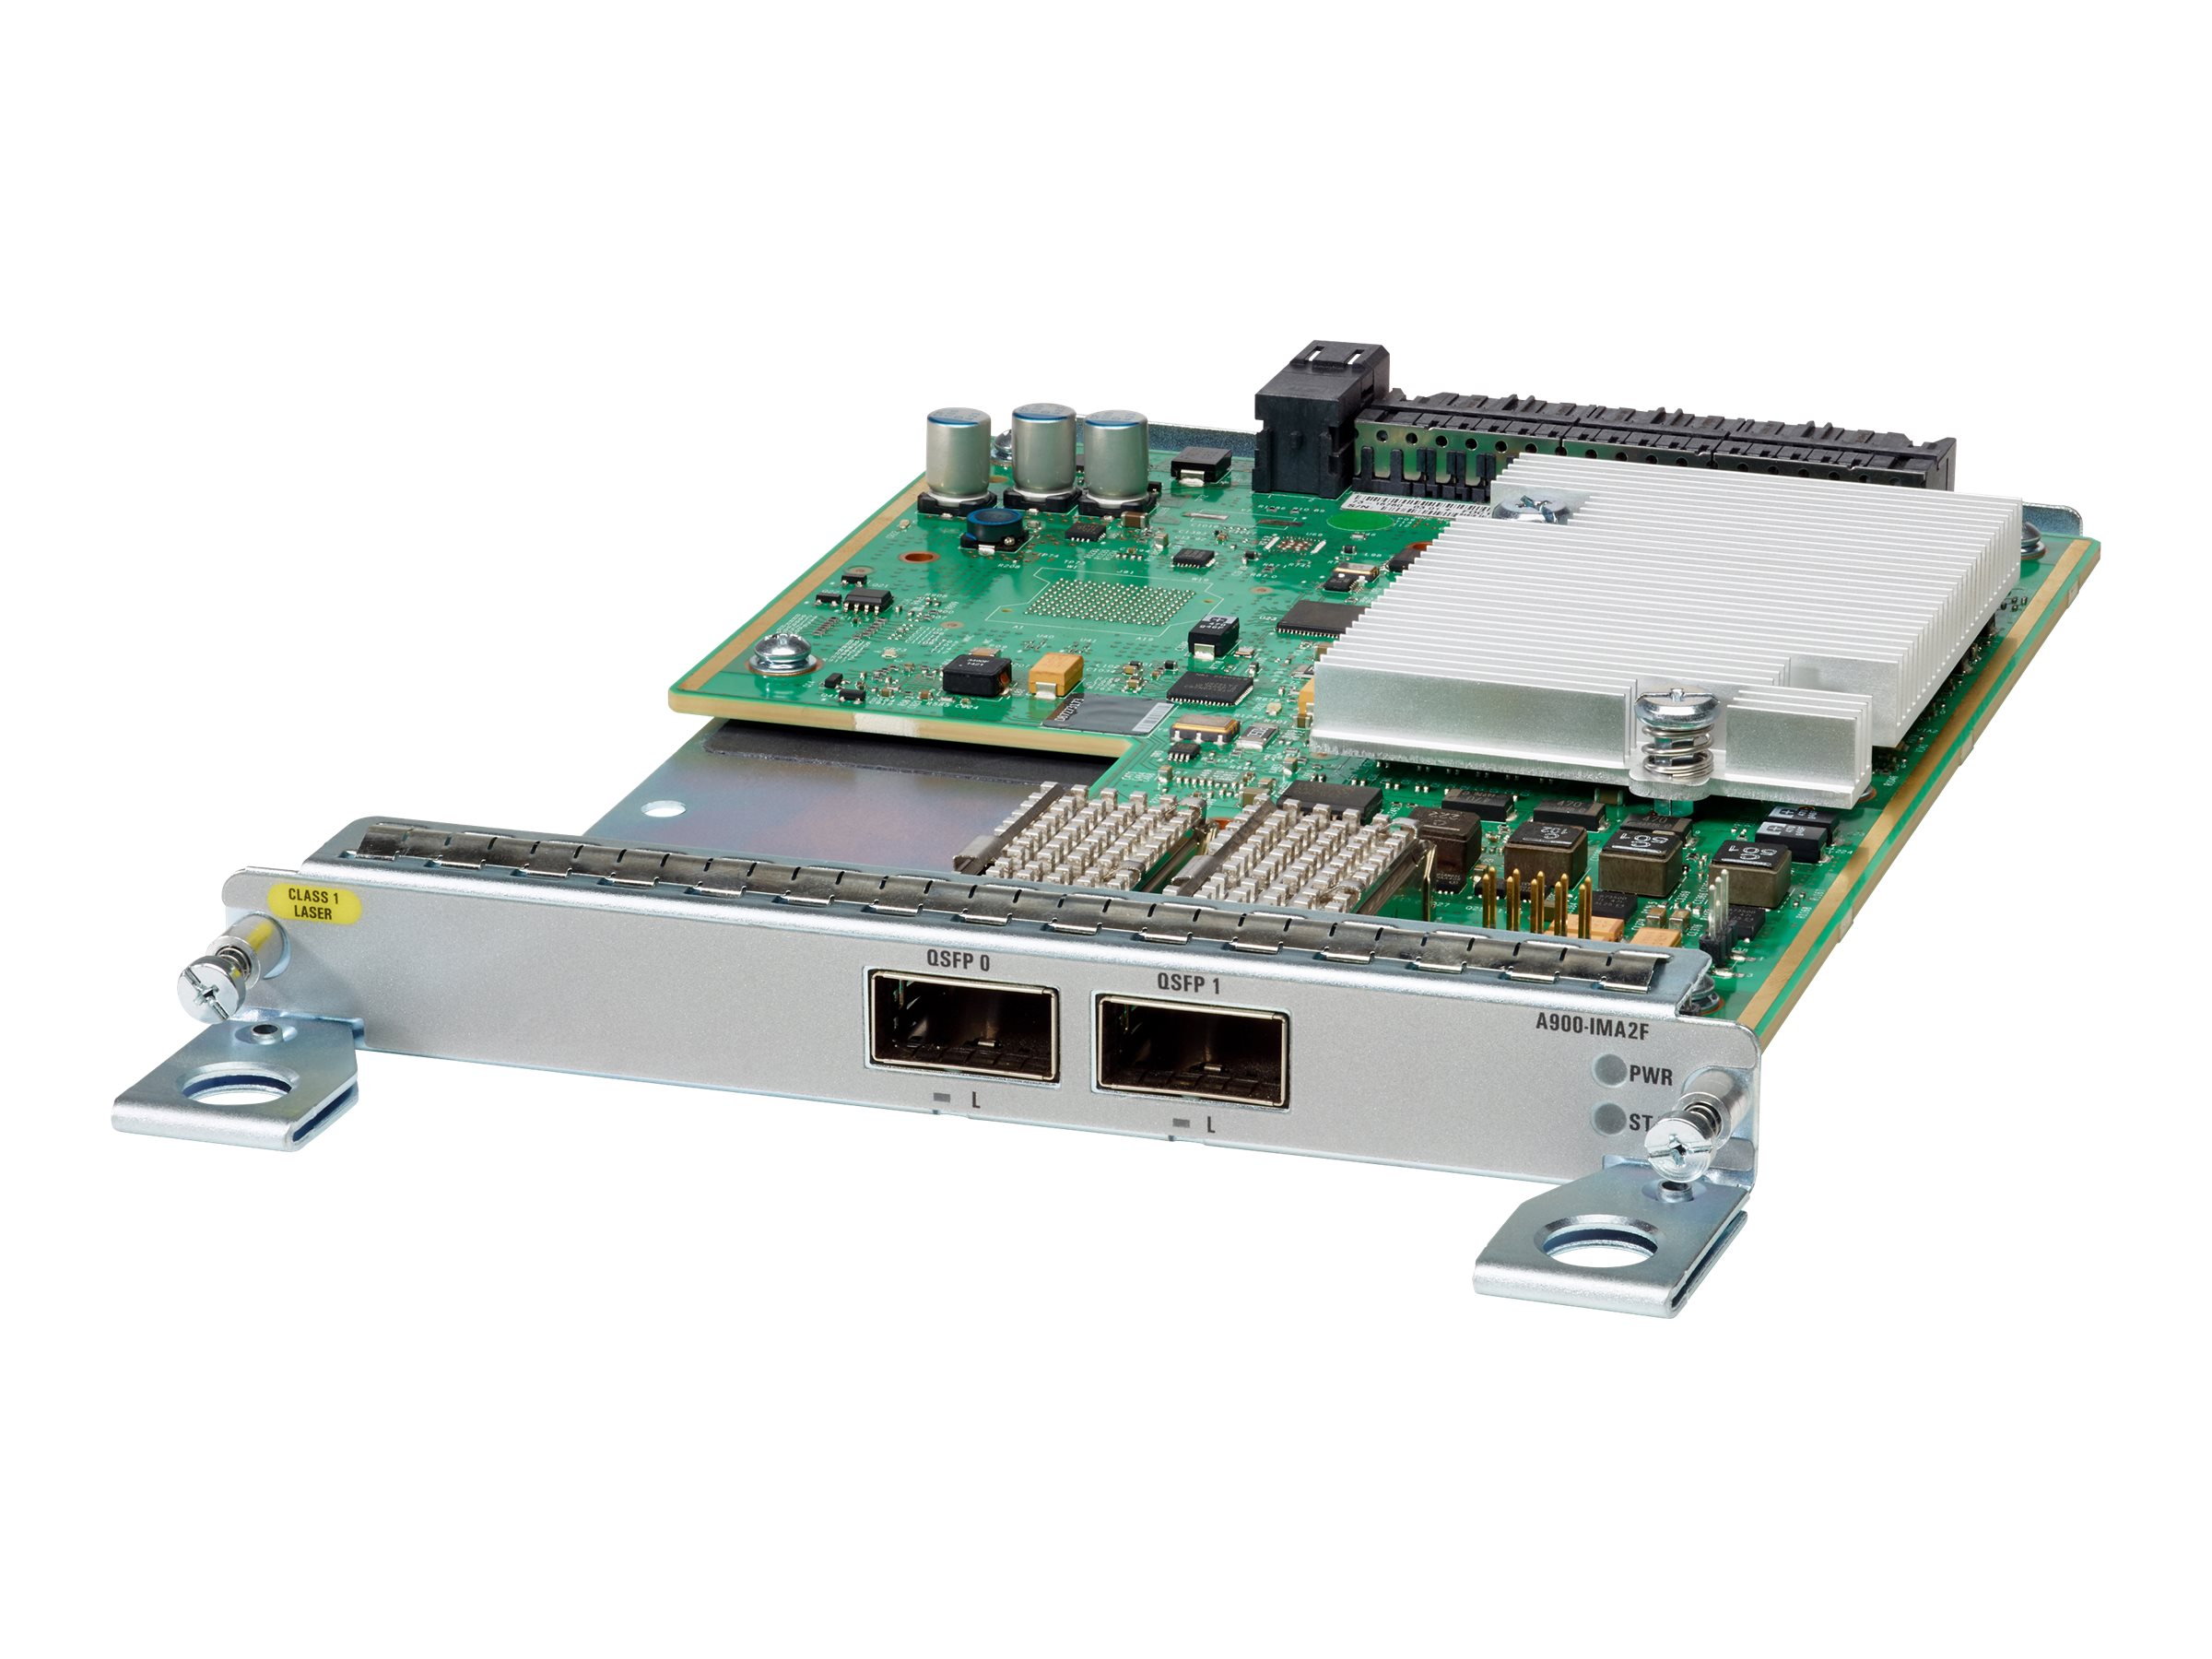 Cisco Interface Module - Erweiterungsmodul - 40 Gigabit QSFP x 2 - fr ASR 901, 901 10G, 901S, 902, 903, 920